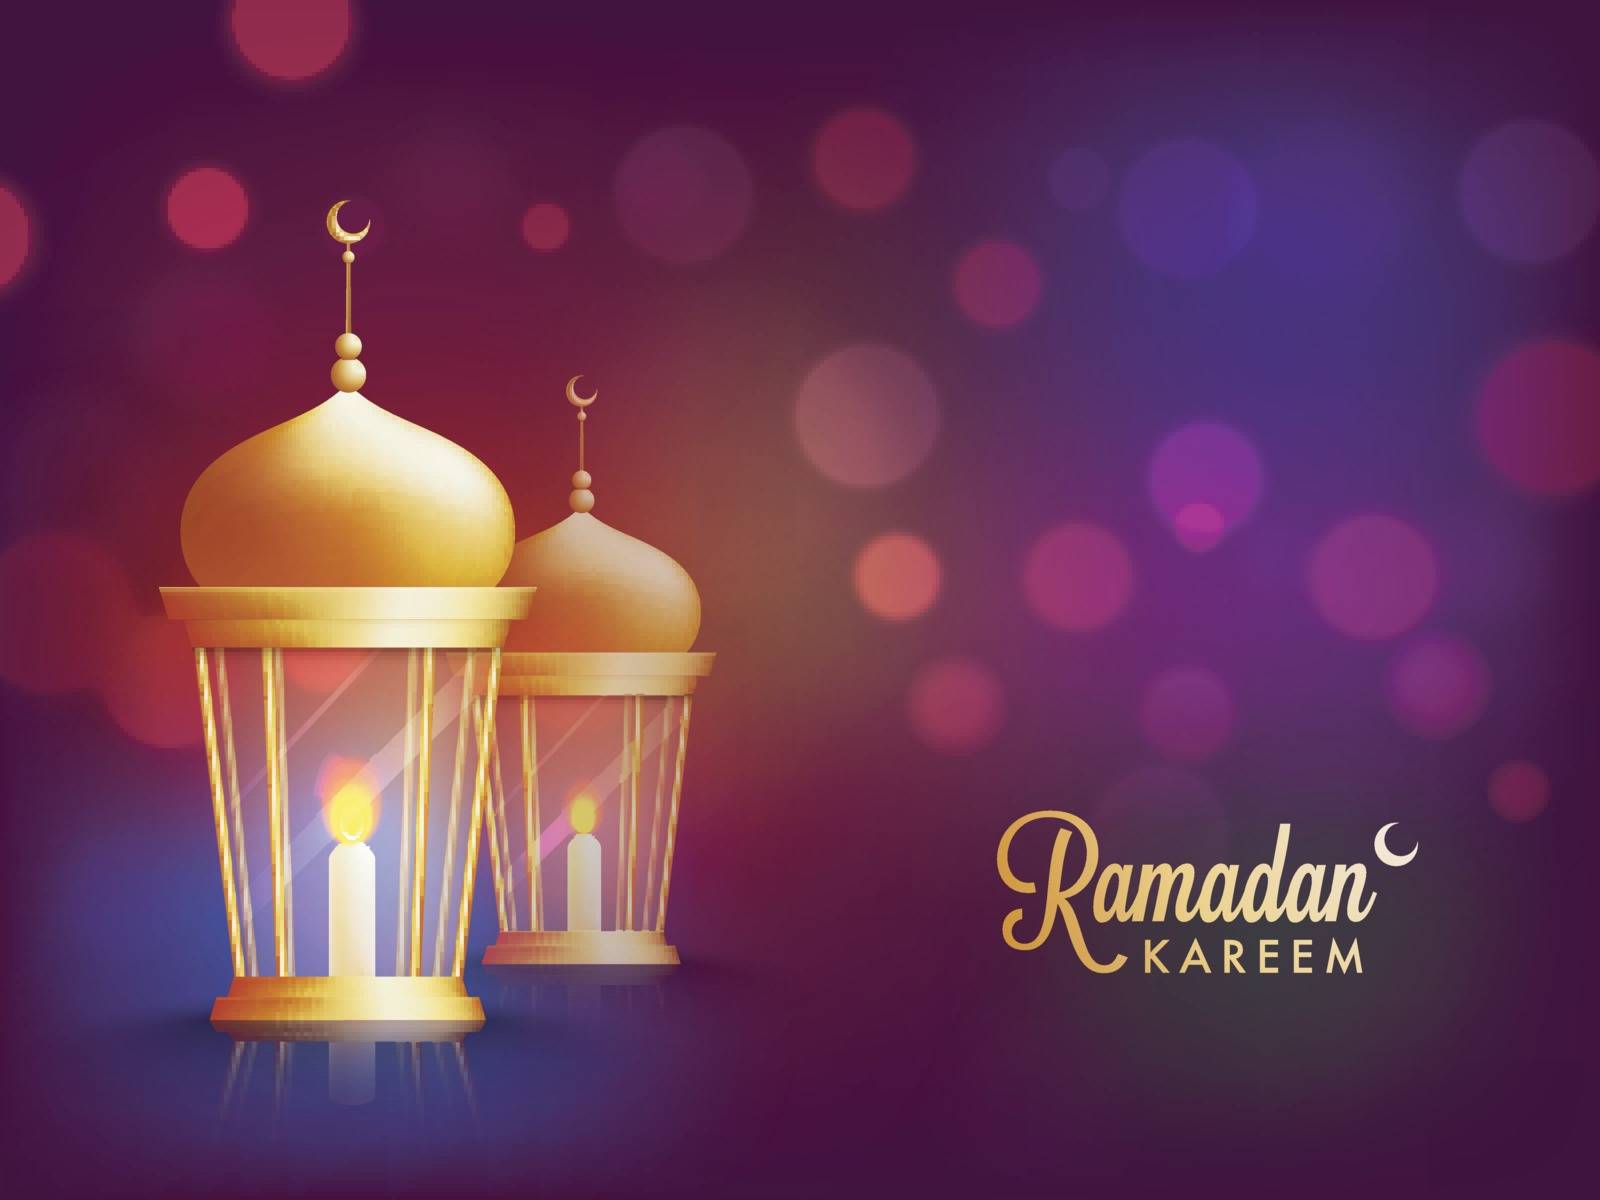 Glossy illuminated Lamps on abstract background for Holy Month of Muslim Community, Ramadan Kareem celebration.